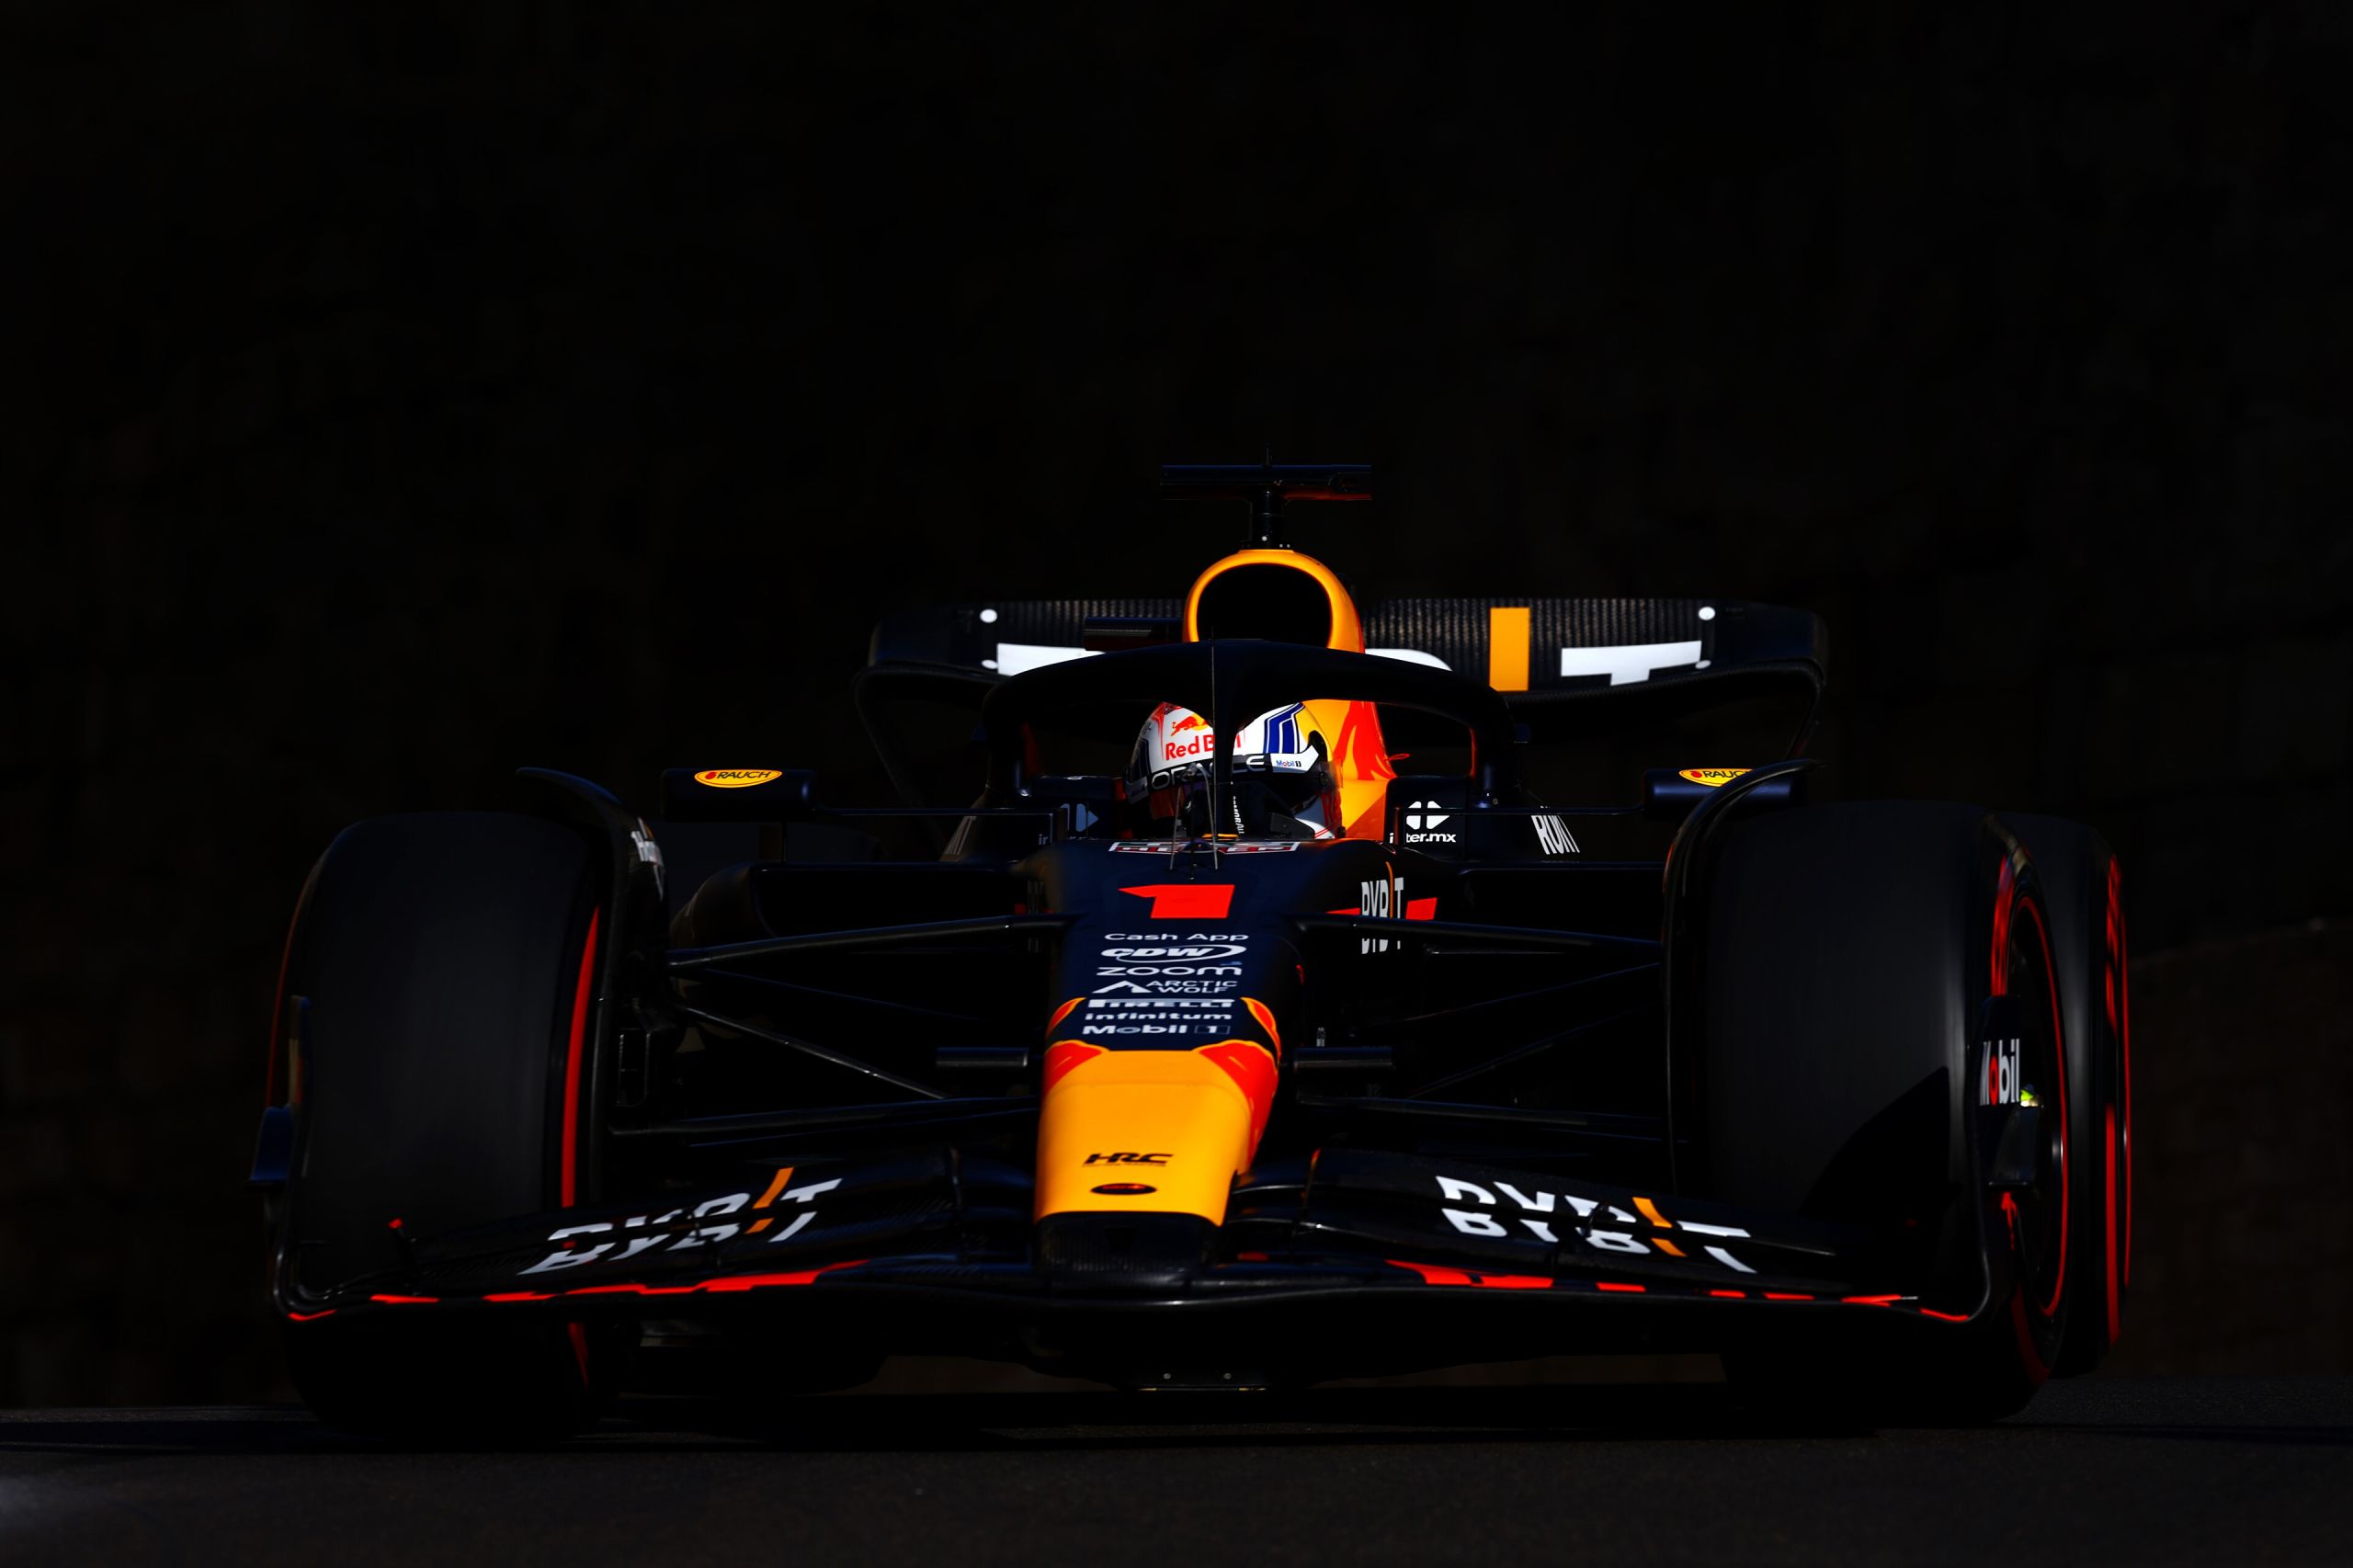 F1 Grand Prix Of Azerbaijan Practice and Qualifying - Max Verstappen